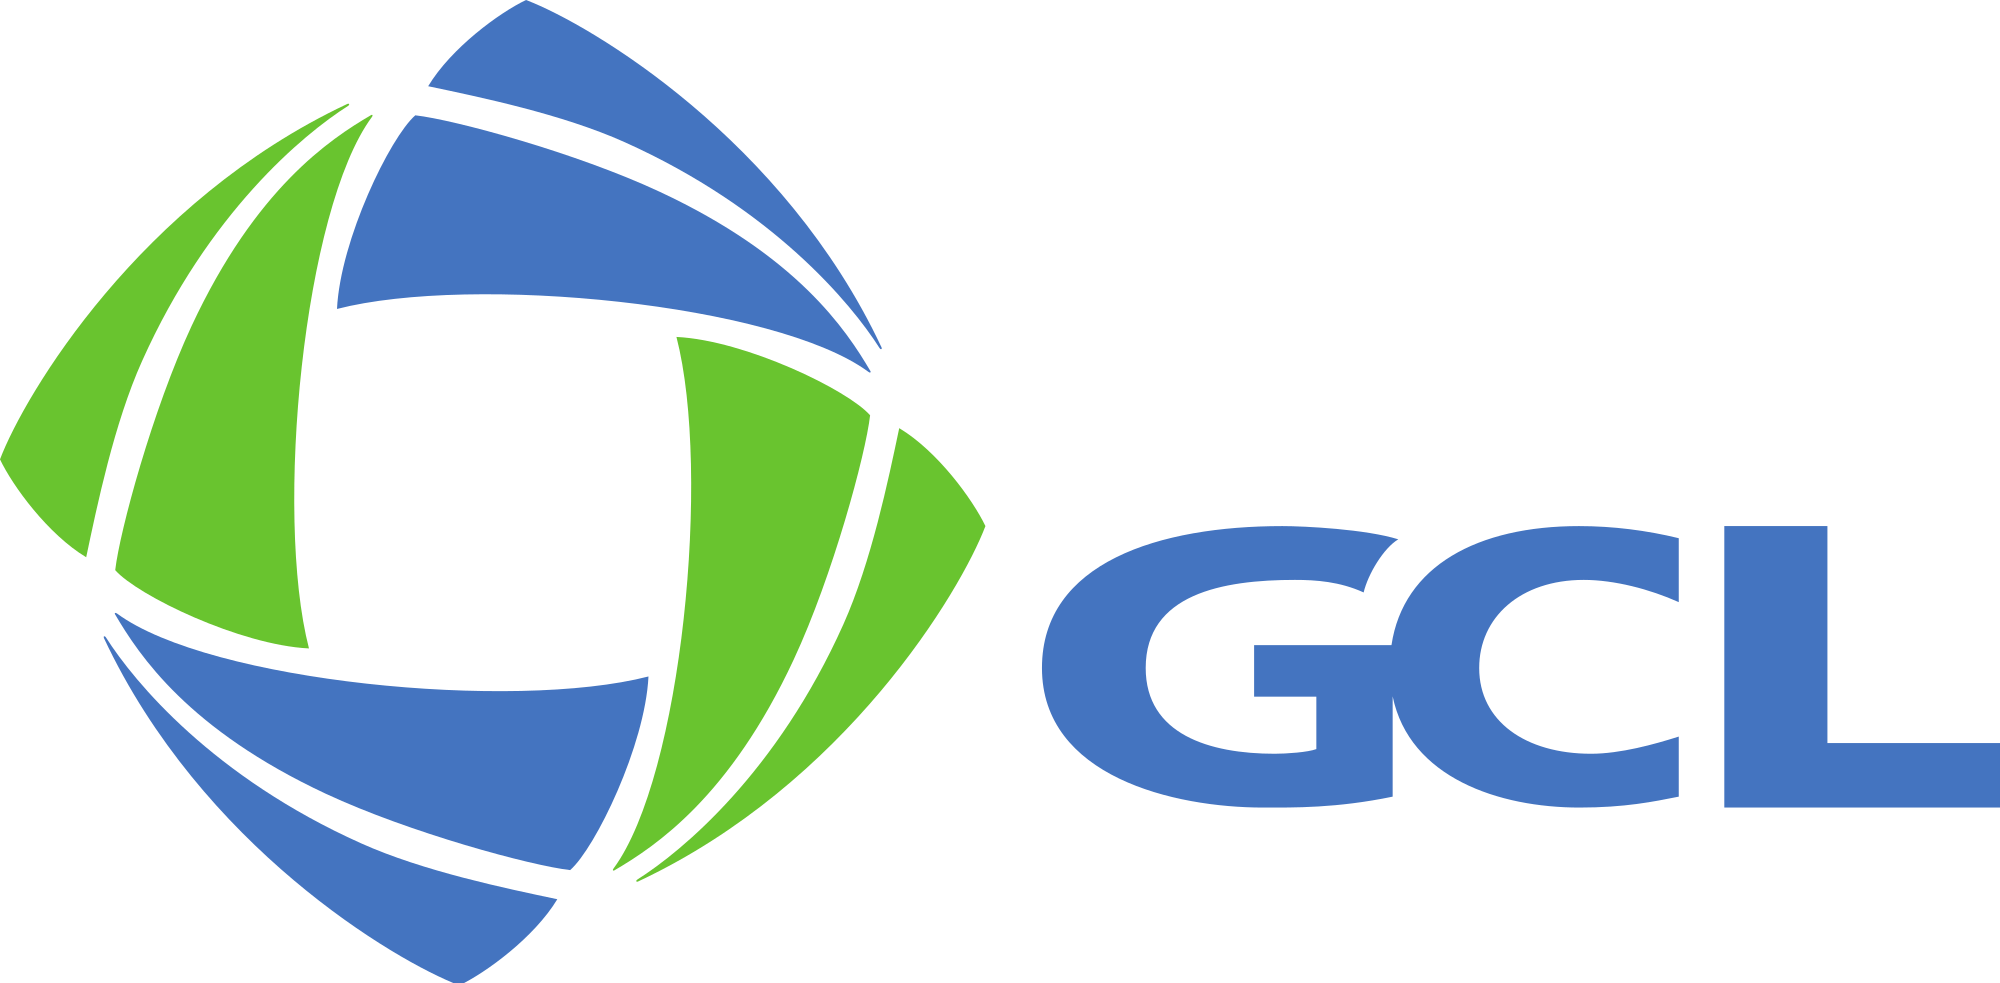 GCL Logo - GCL Poly